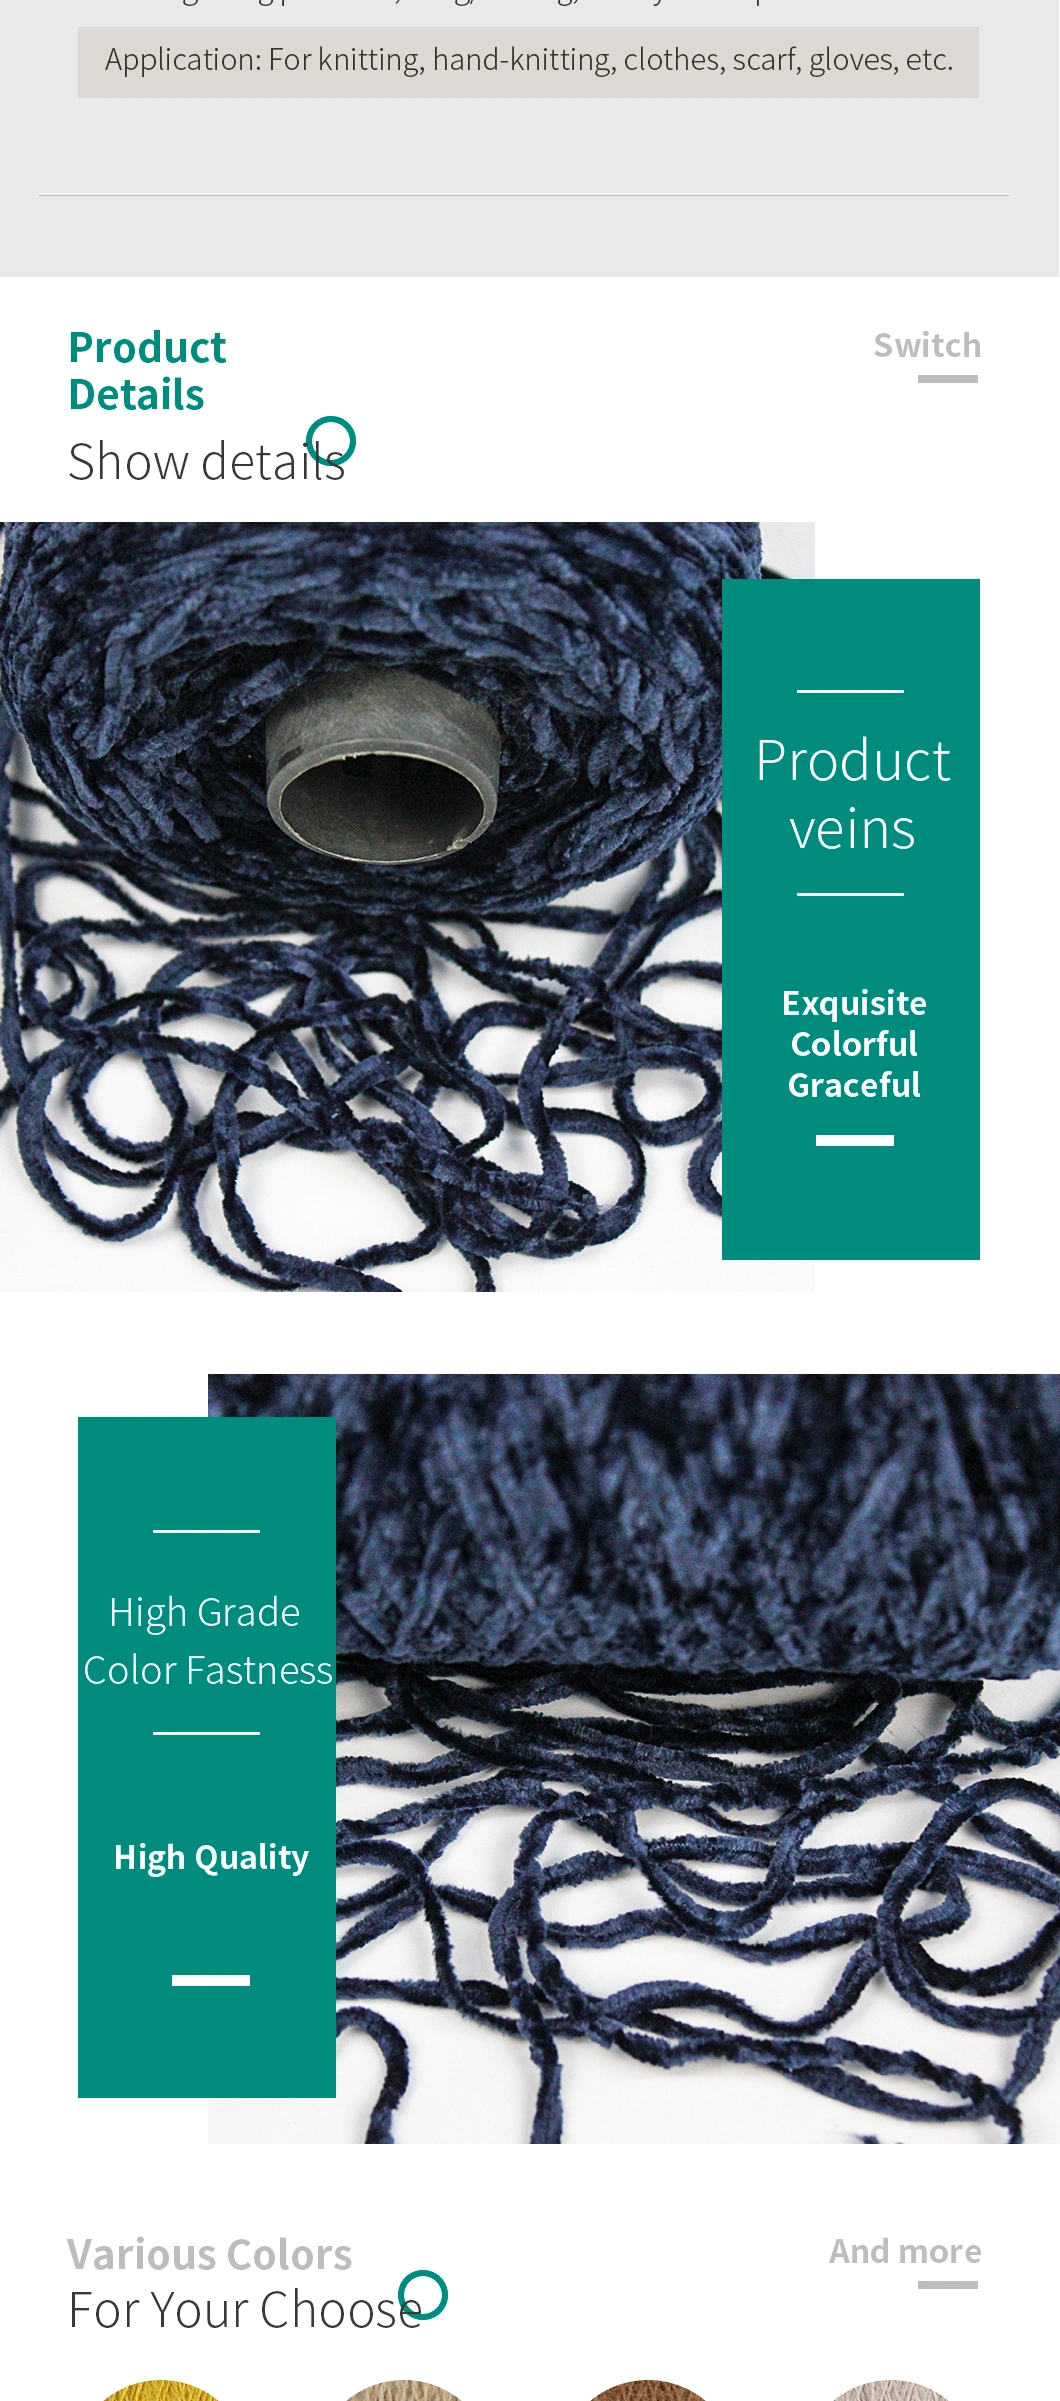 Kingeagle 4.5nm Polyester Chenille Fancy Yarn for Knitting Weaving